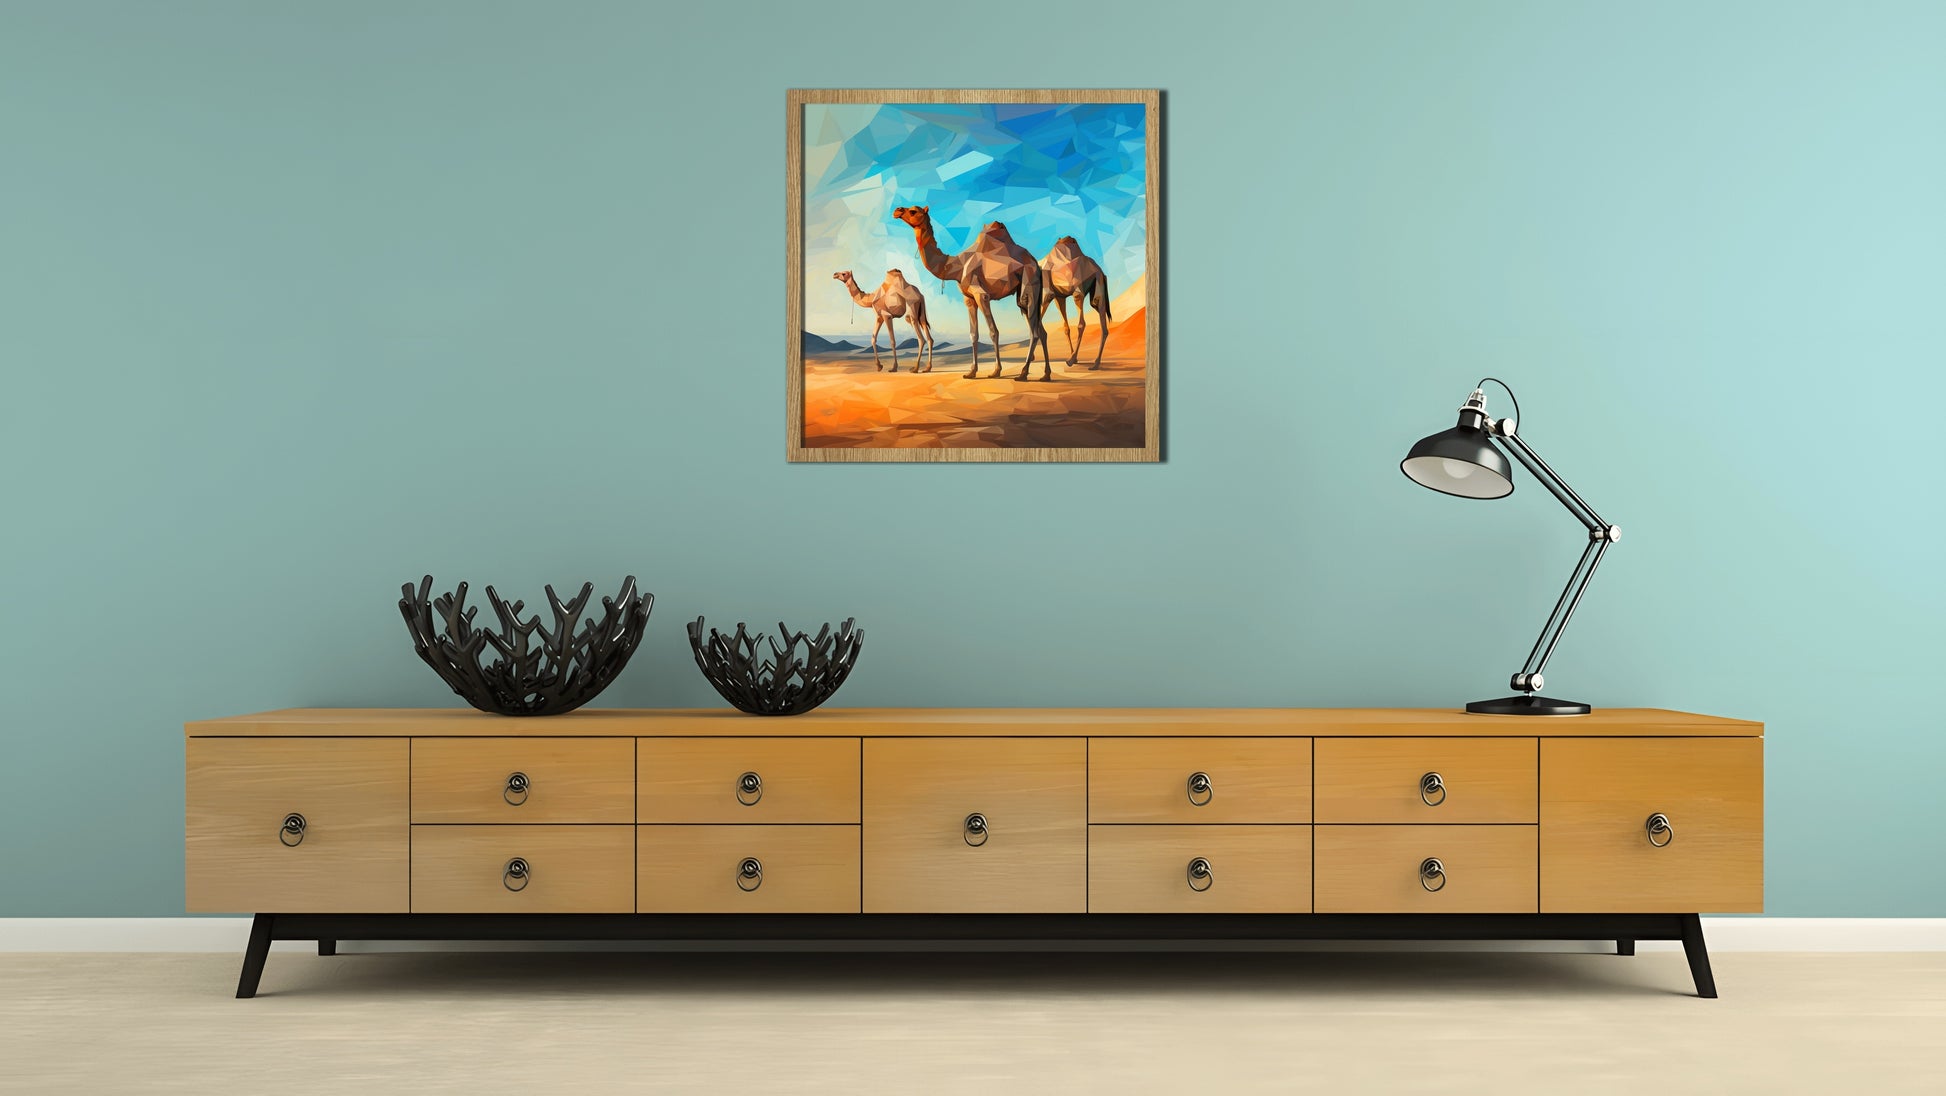 Camel Caravan Swadesh Art Studio